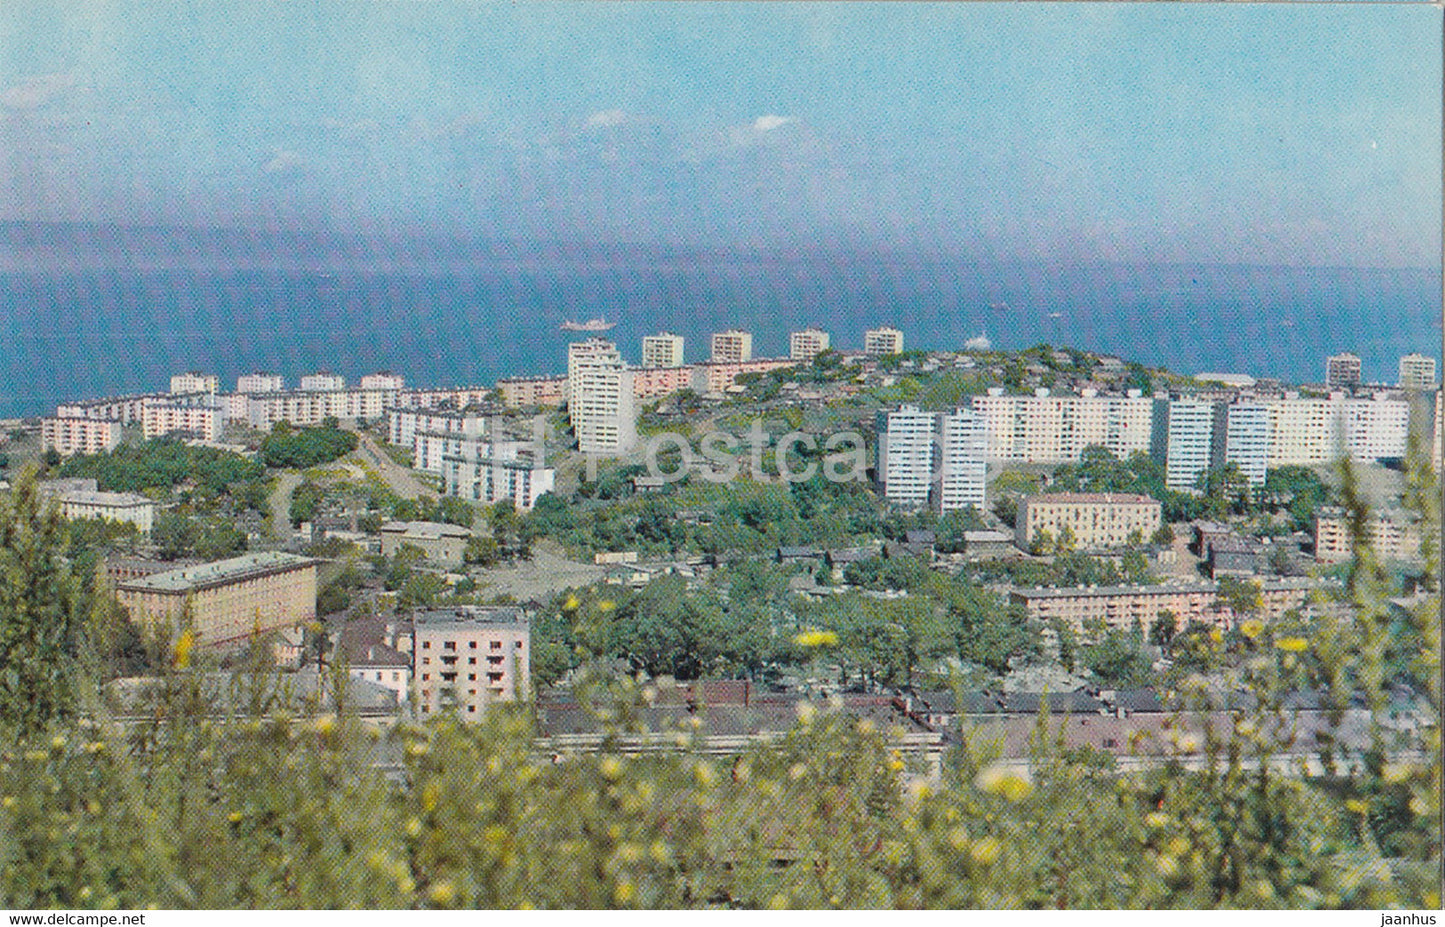 Vladivostok - new residential area in the area of Okeansky prospect - 1973 - Russia USSR - unused - JH Postcards